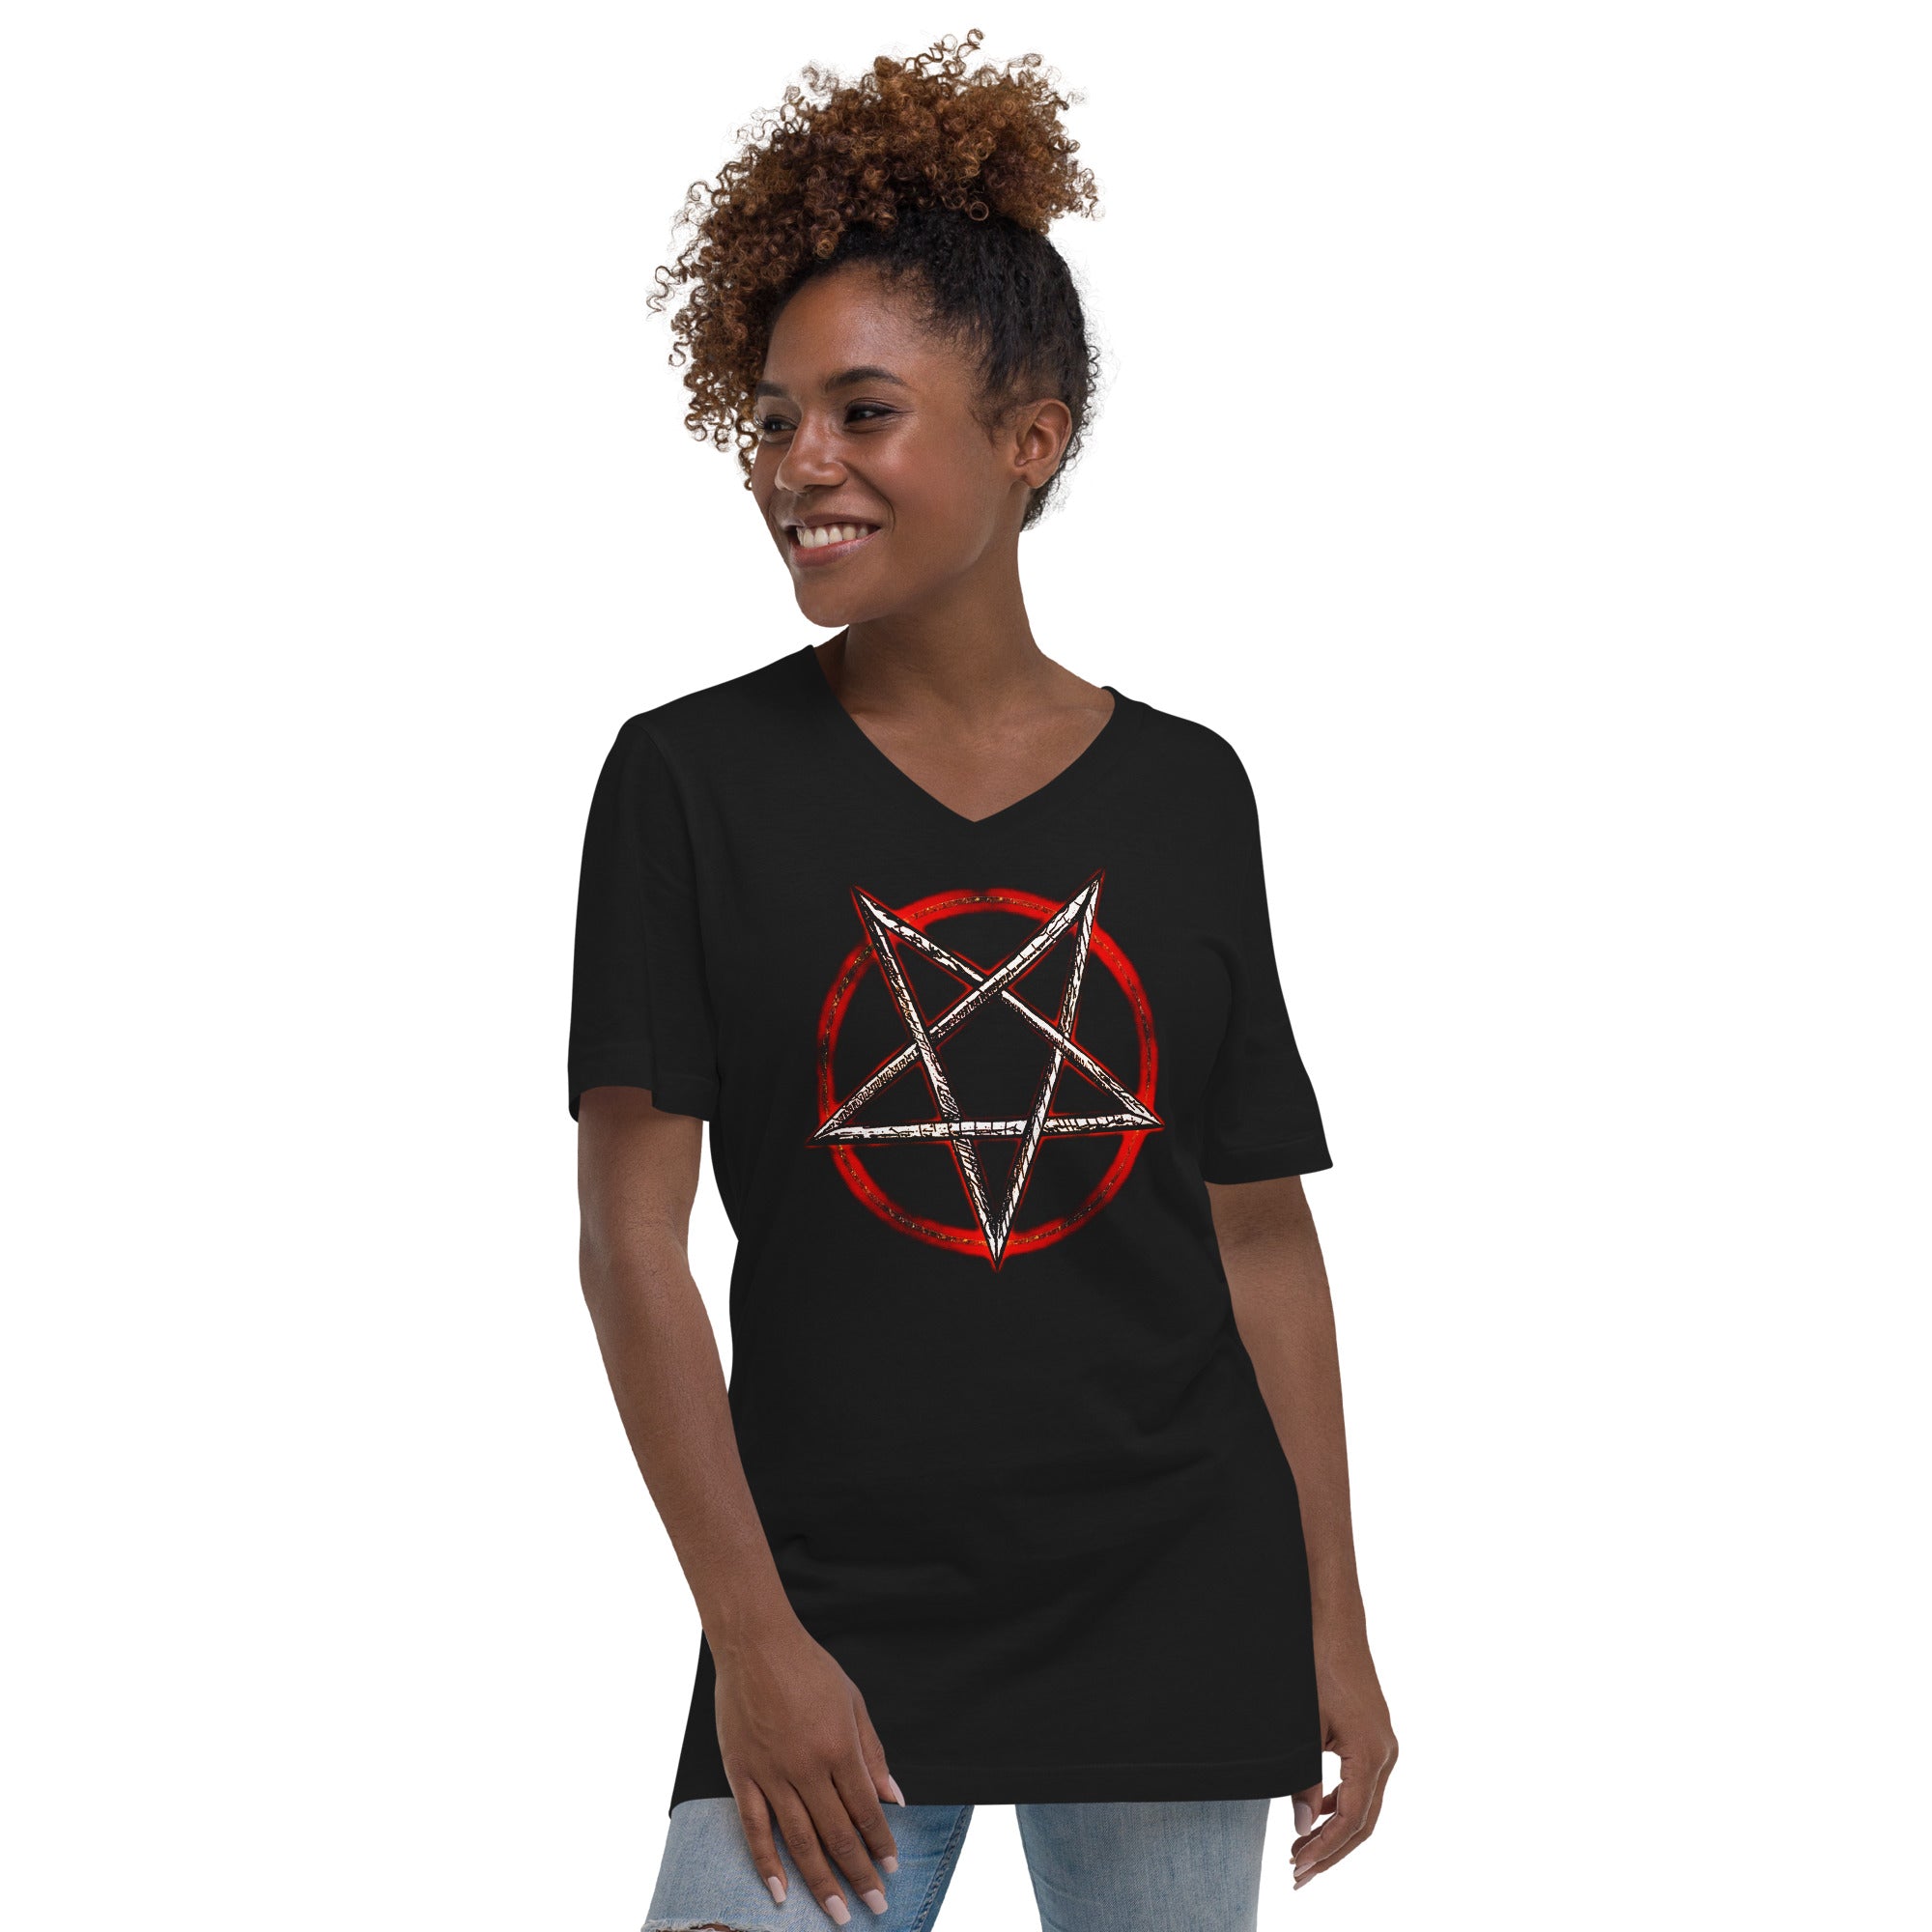 Fire and Brimstone Inverted Pentagram Unholy Women’s Short Sleeve V-Neck T-Shirt - Edge of Life Designs